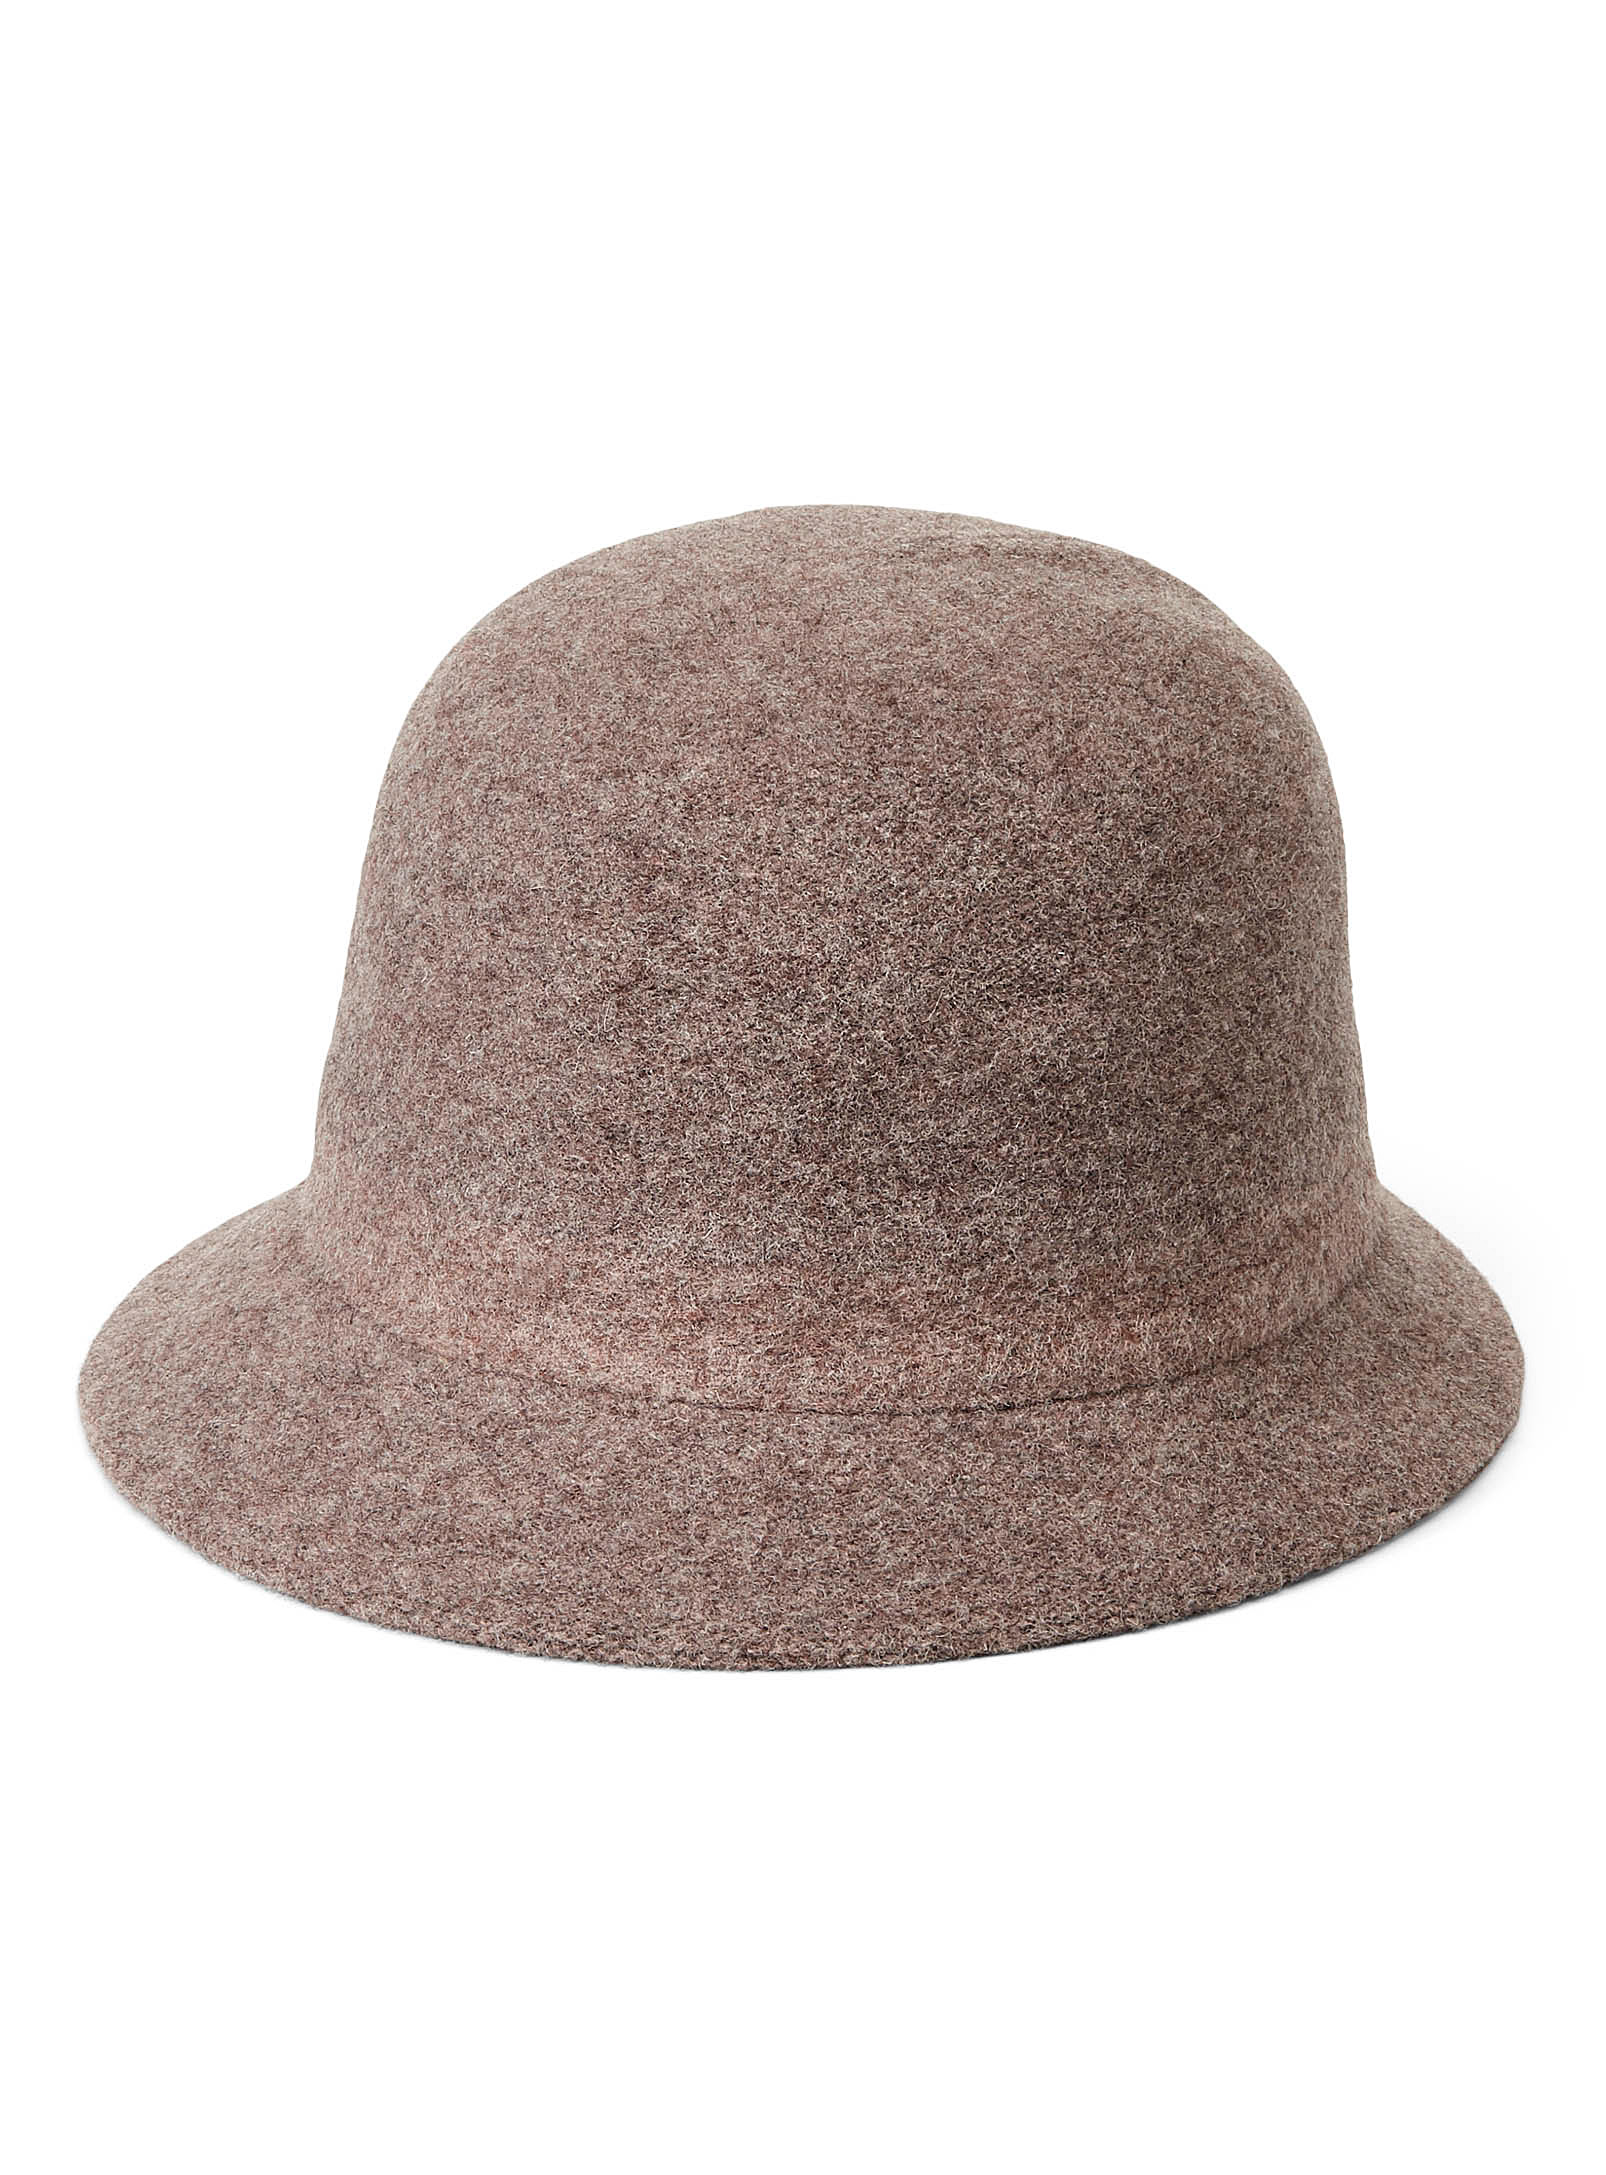 Canadian Hat Minimalist Cloche In Cream Beige